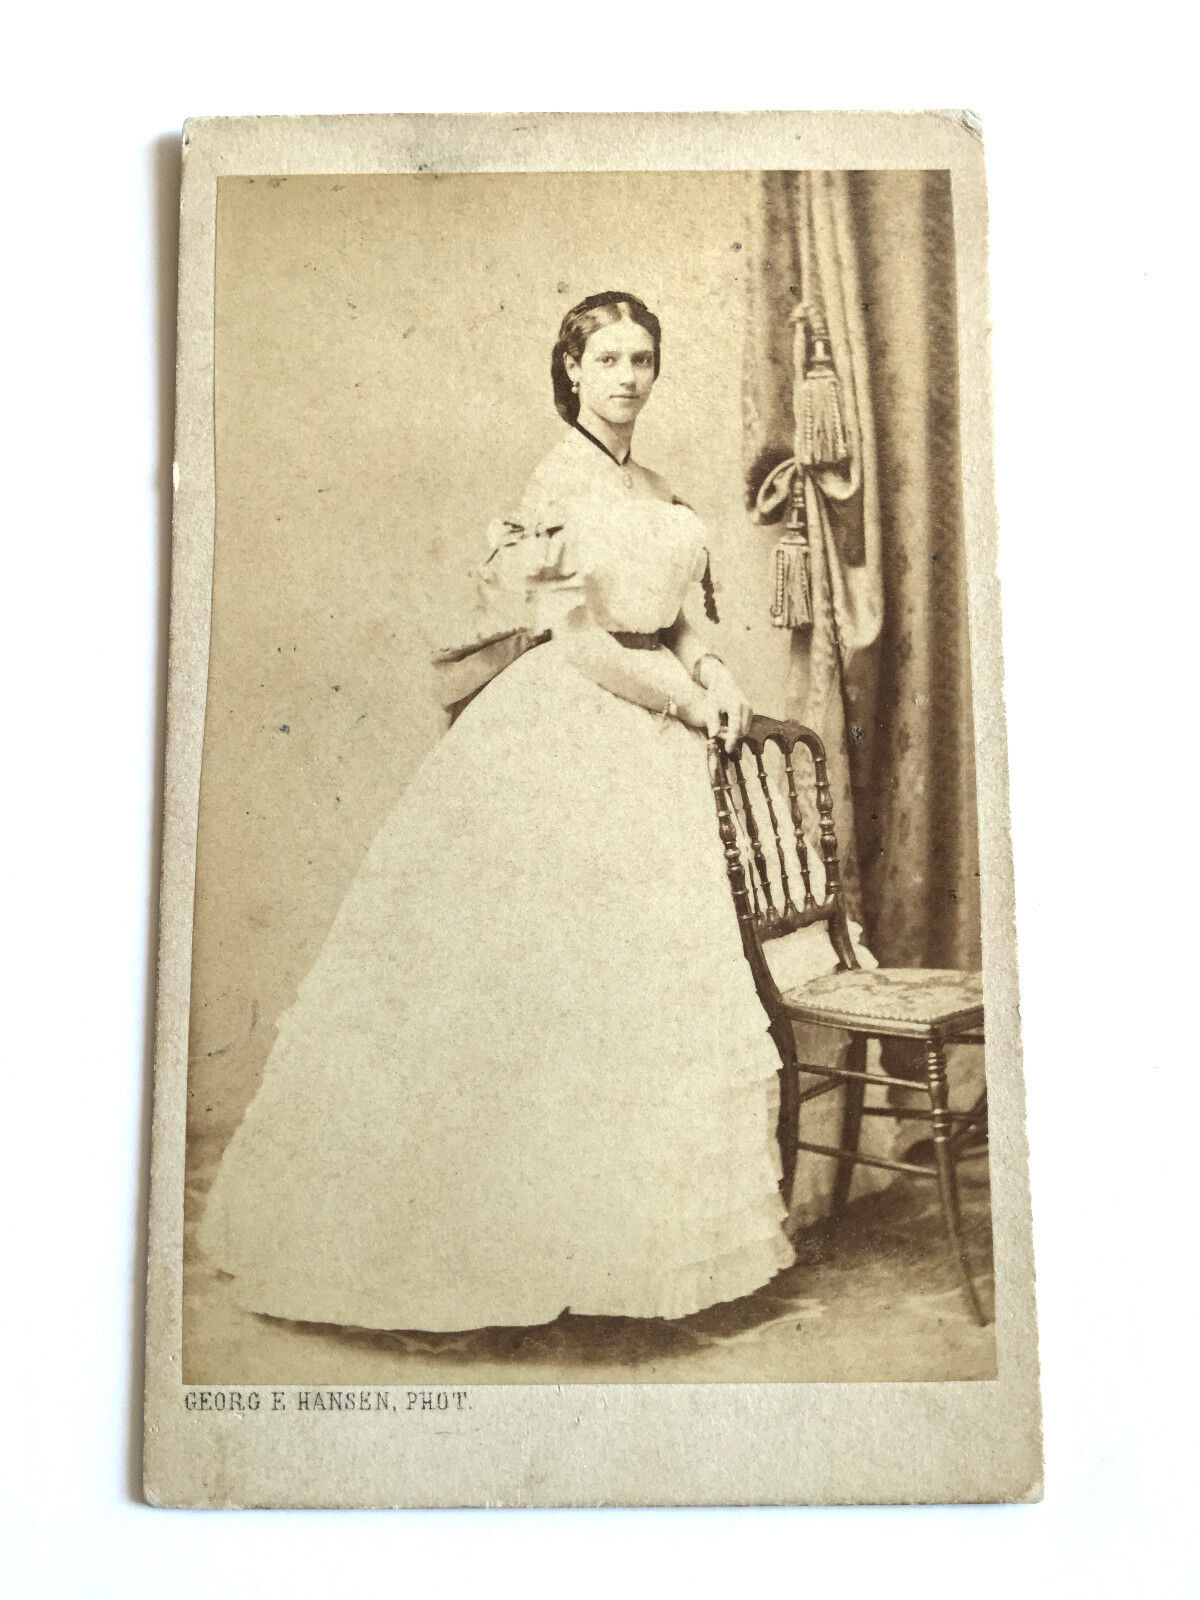 The Original Photograph of Marie Feodorovna Dagmar Signed by Georg E.Hansen